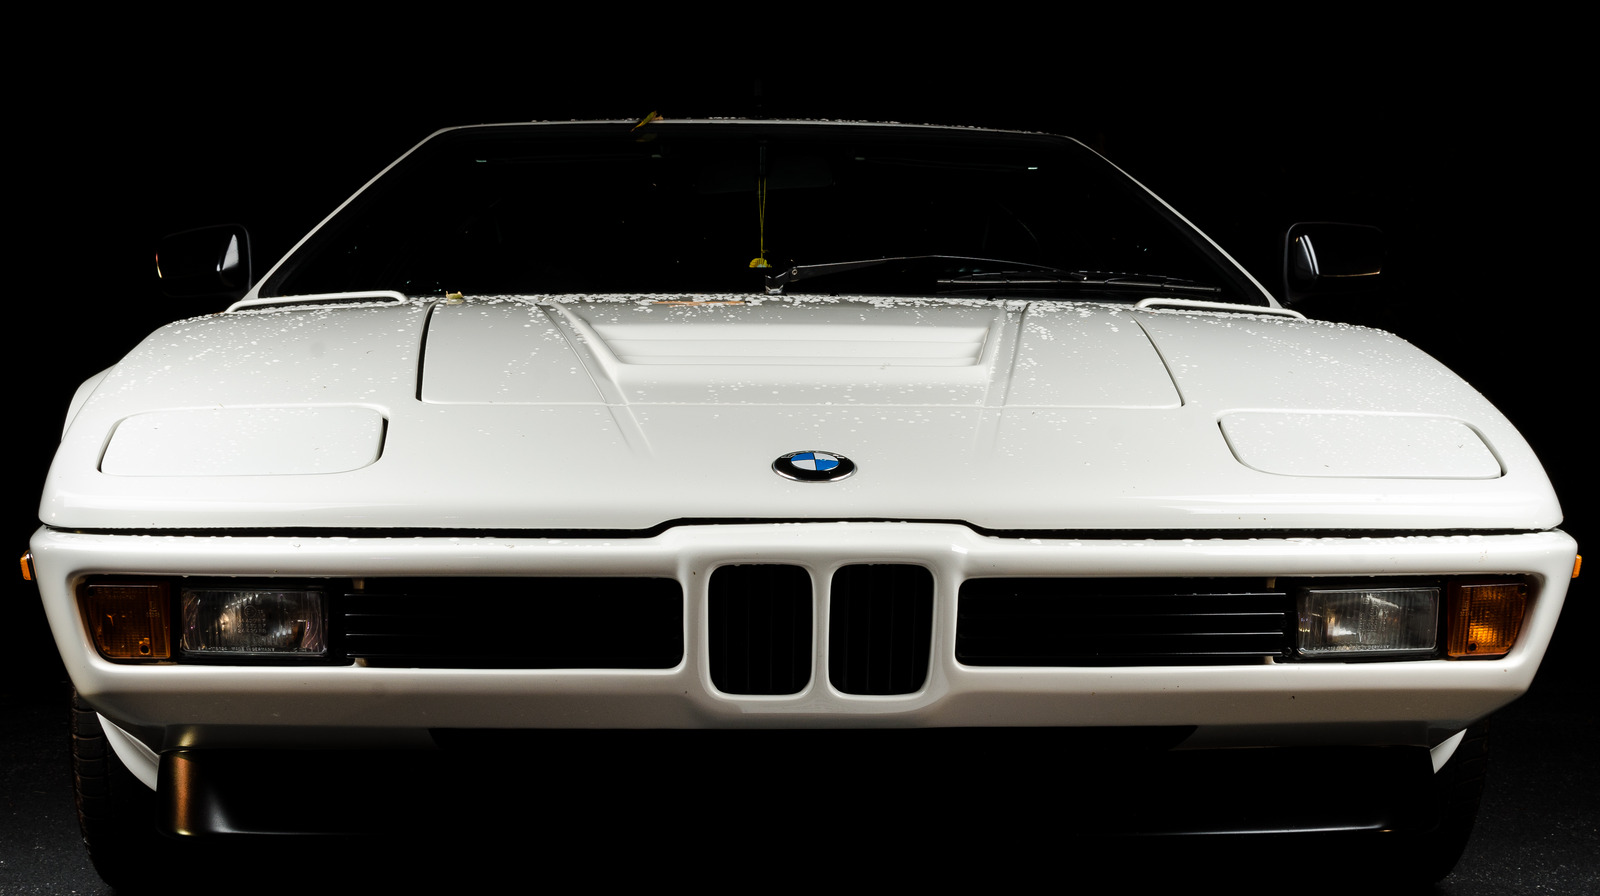 The Forgotten BMW Concept Car That’s Still Futuristic Today